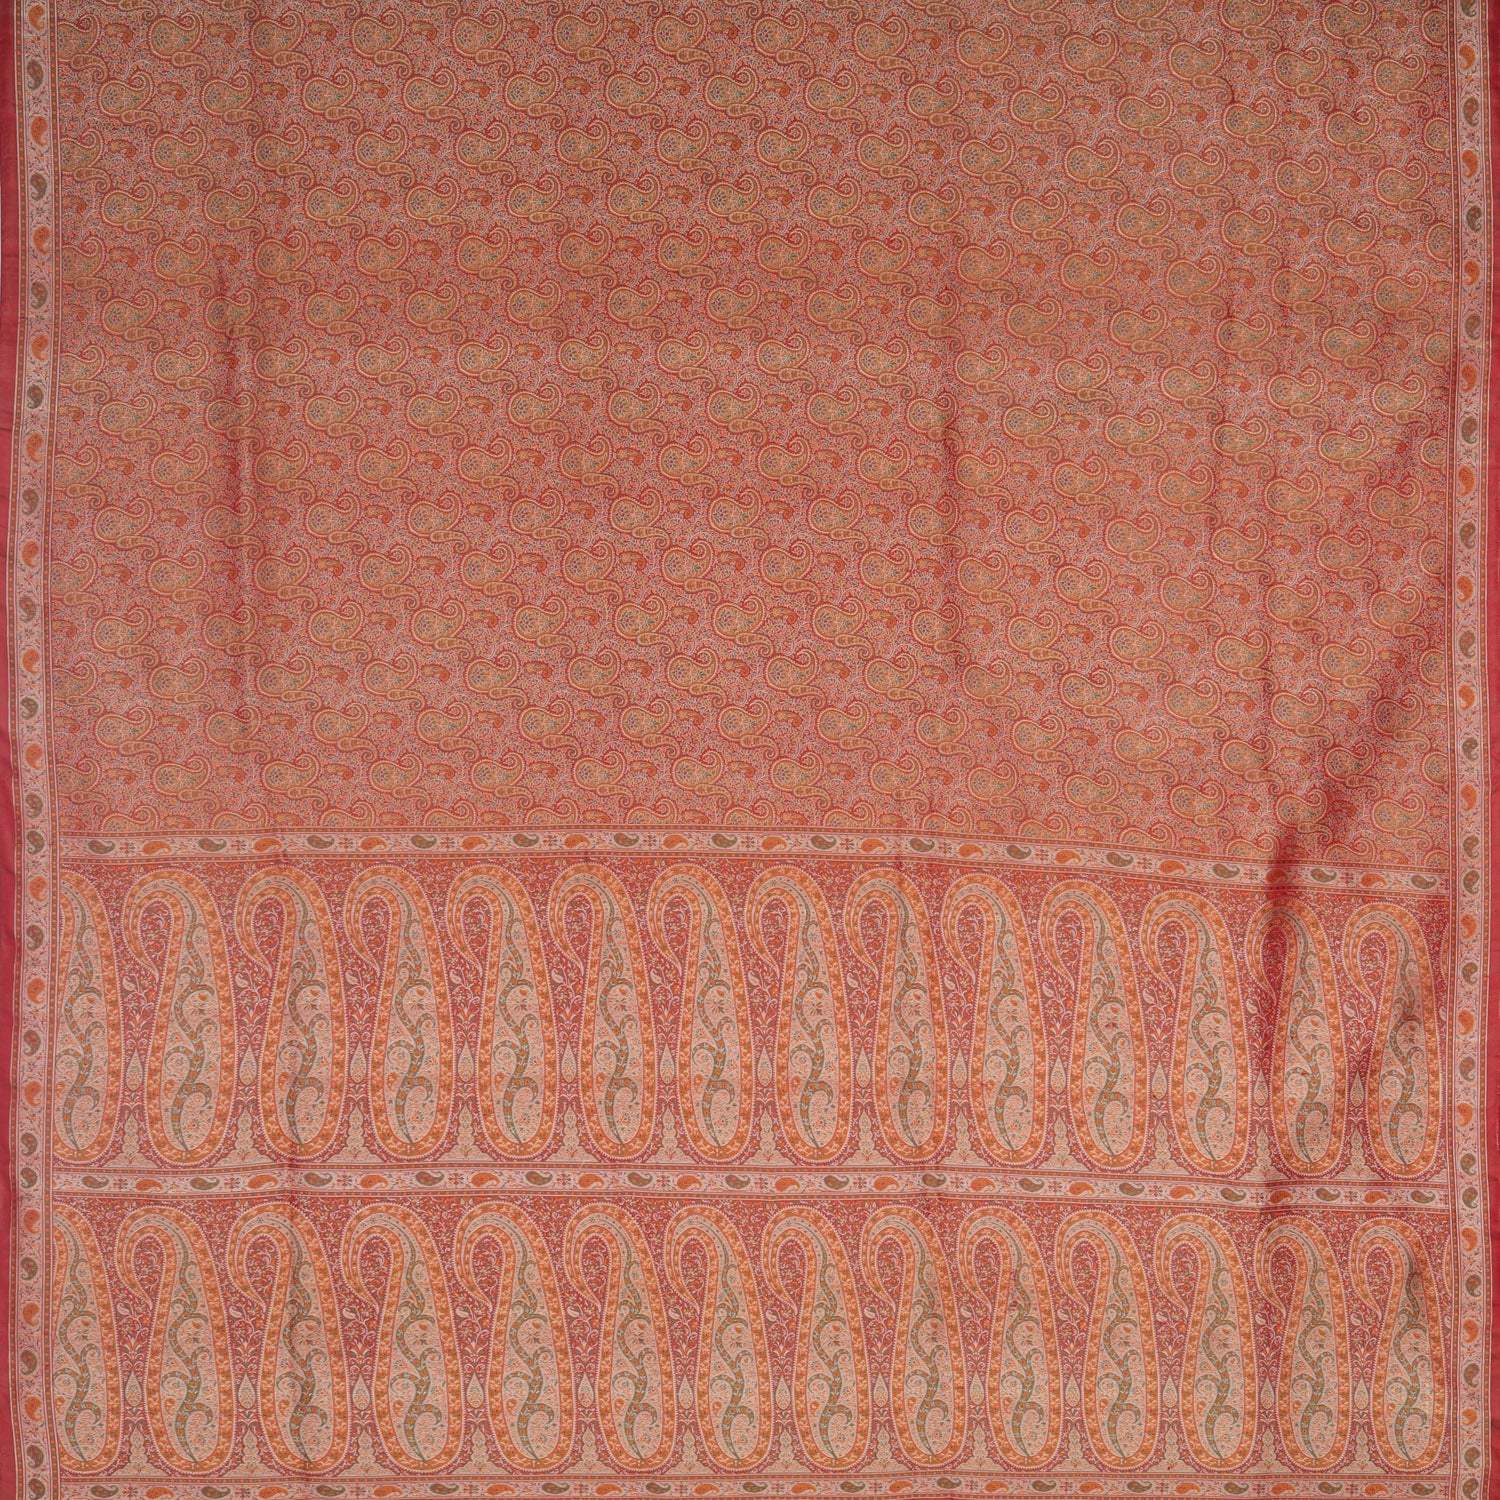 Tomato Red Banarasi Silk Handloom Saree With Paisley Motif Pattern - Singhania's